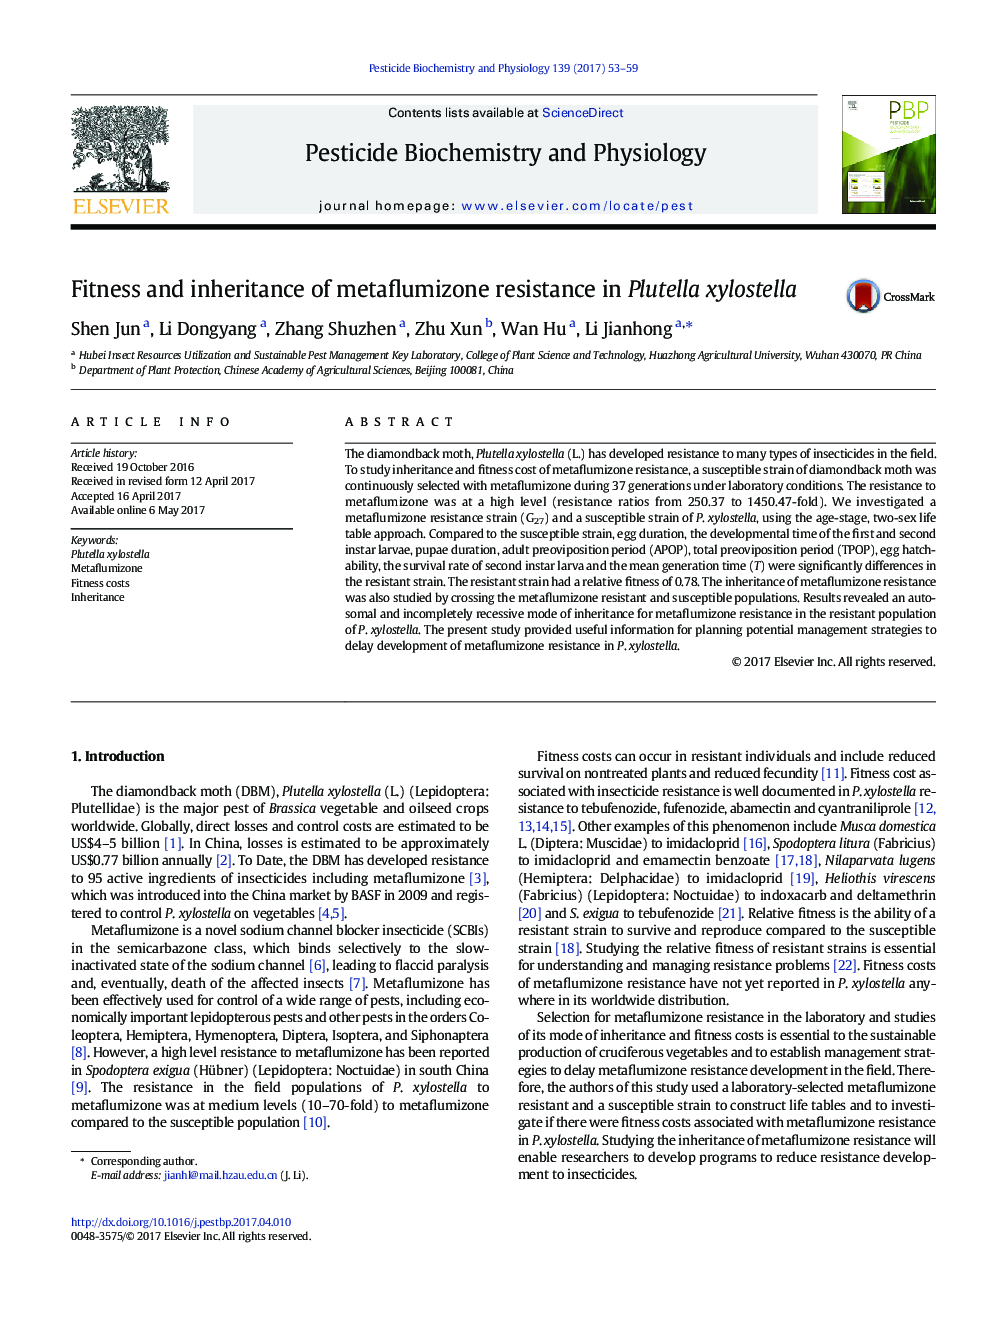 Fitness and inheritance of metaflumizone resistance in Plutella xylostella